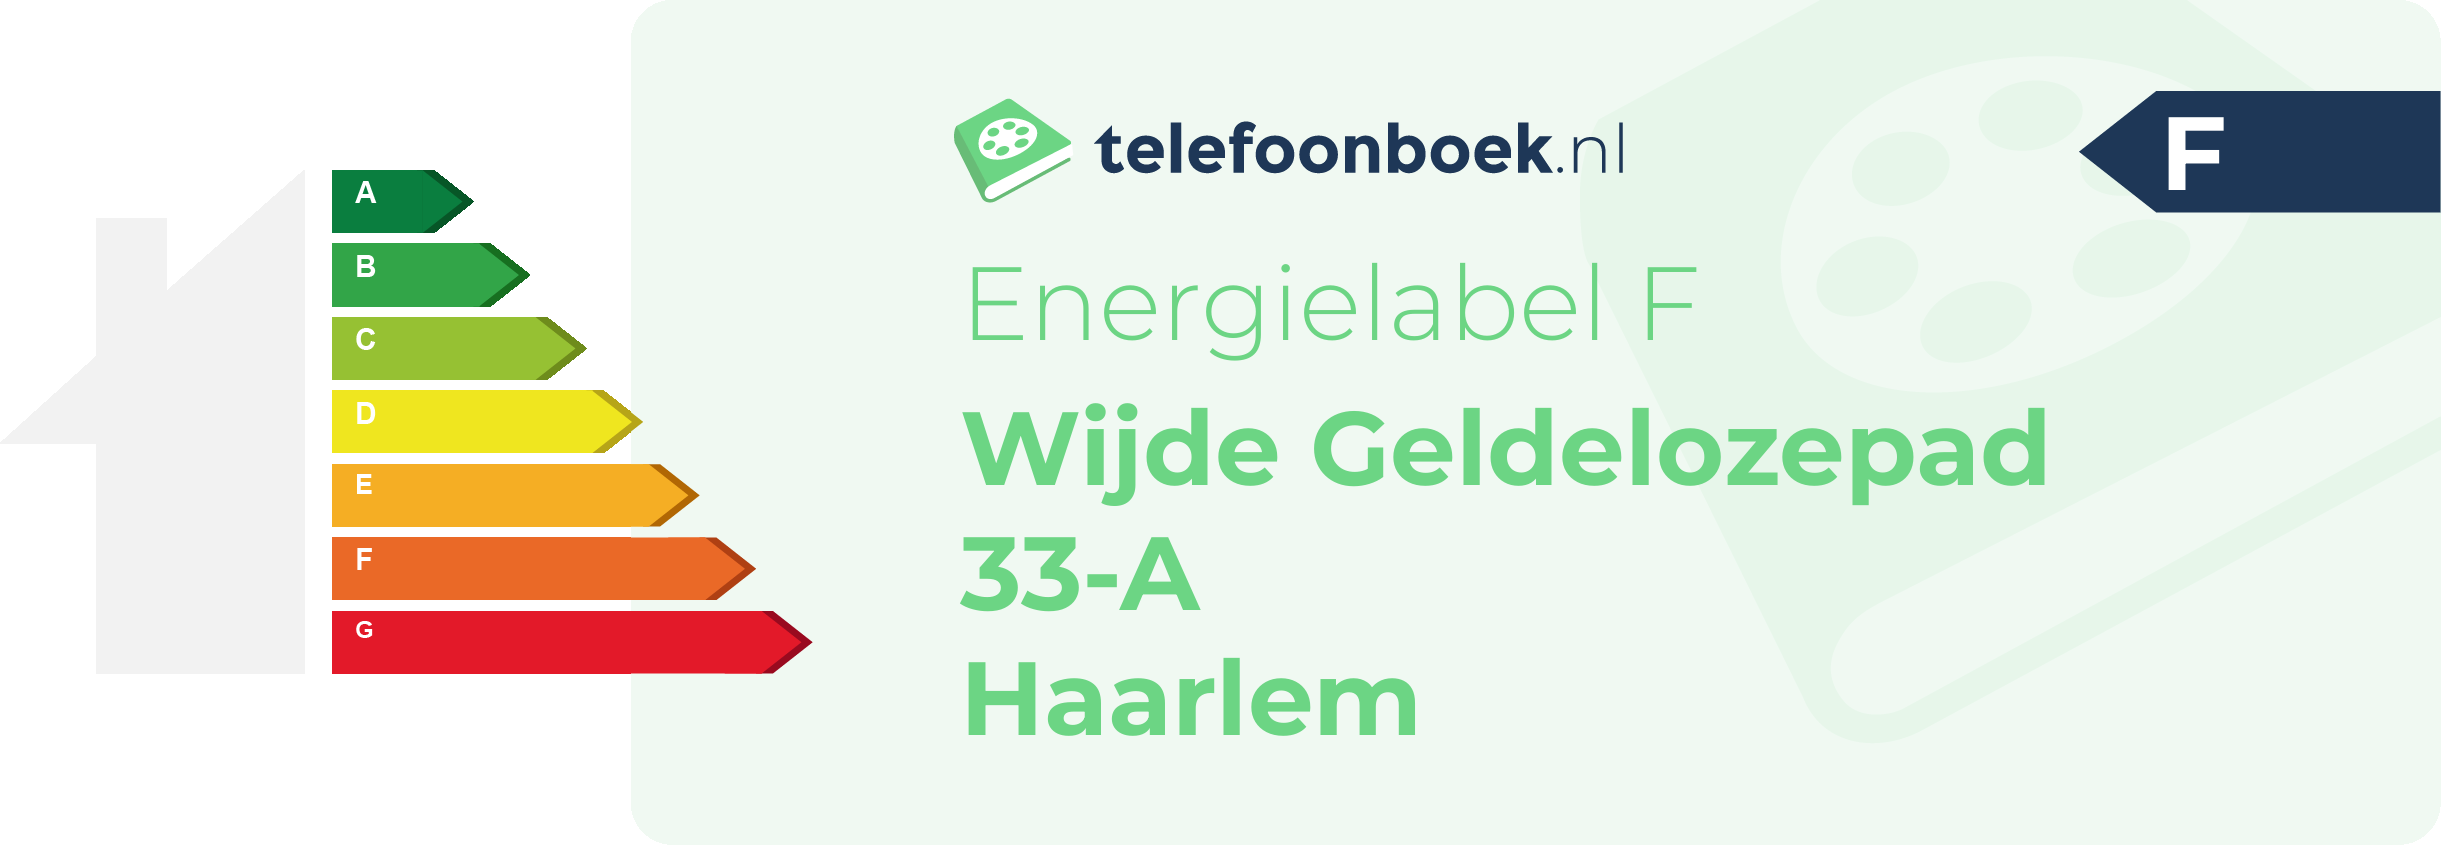 Energielabel Wijde Geldelozepad 33-A Haarlem